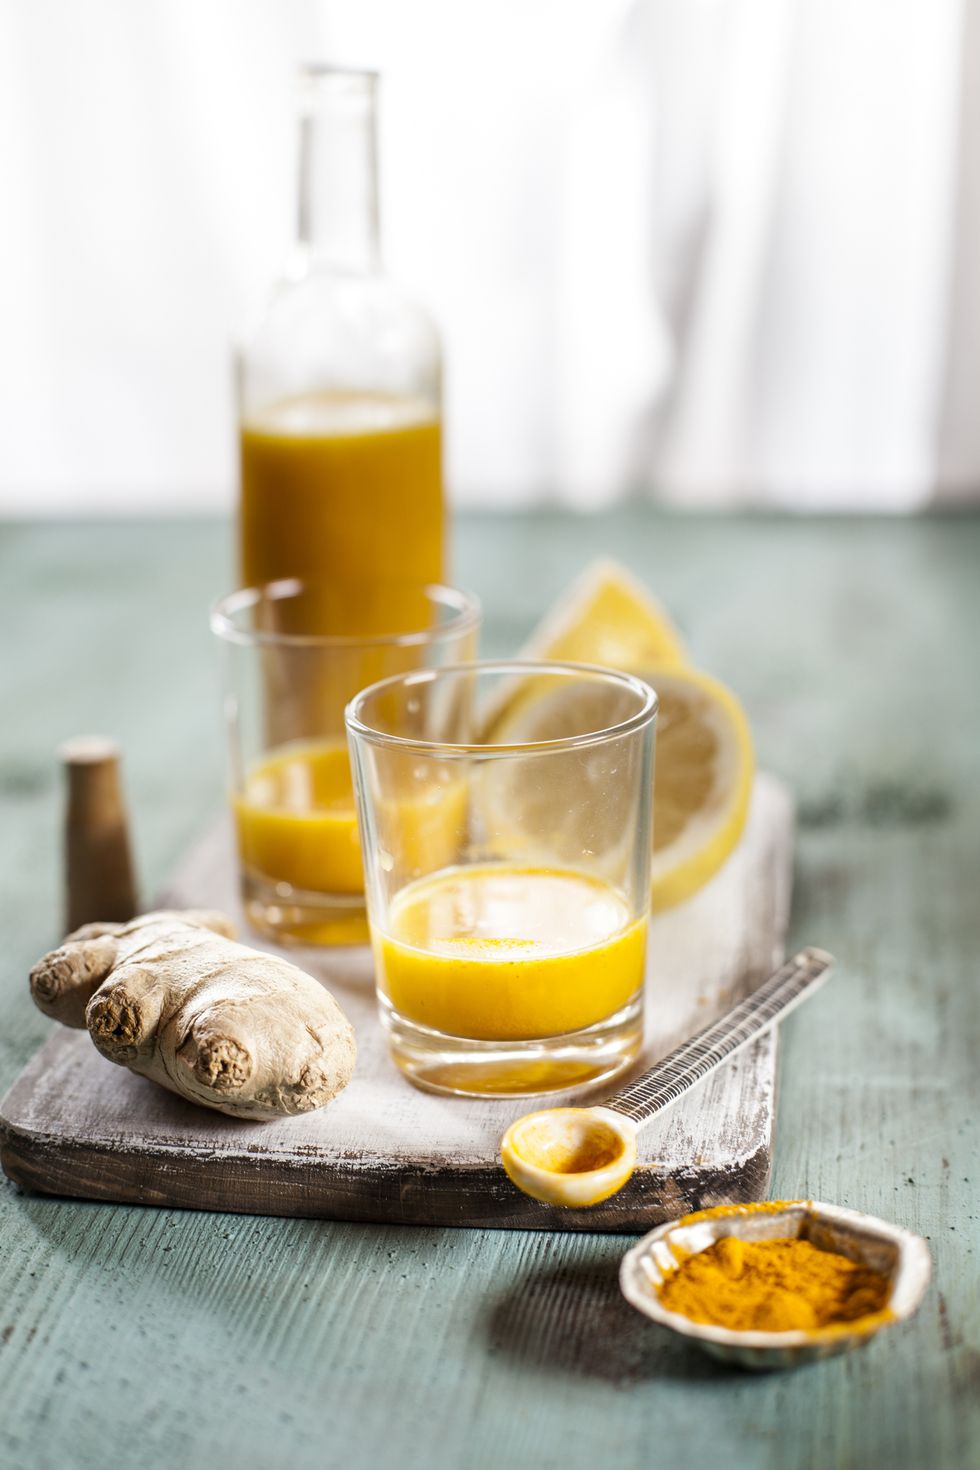 Detox drink, ginger, lemon and orange juice with curcuma and chilli powder